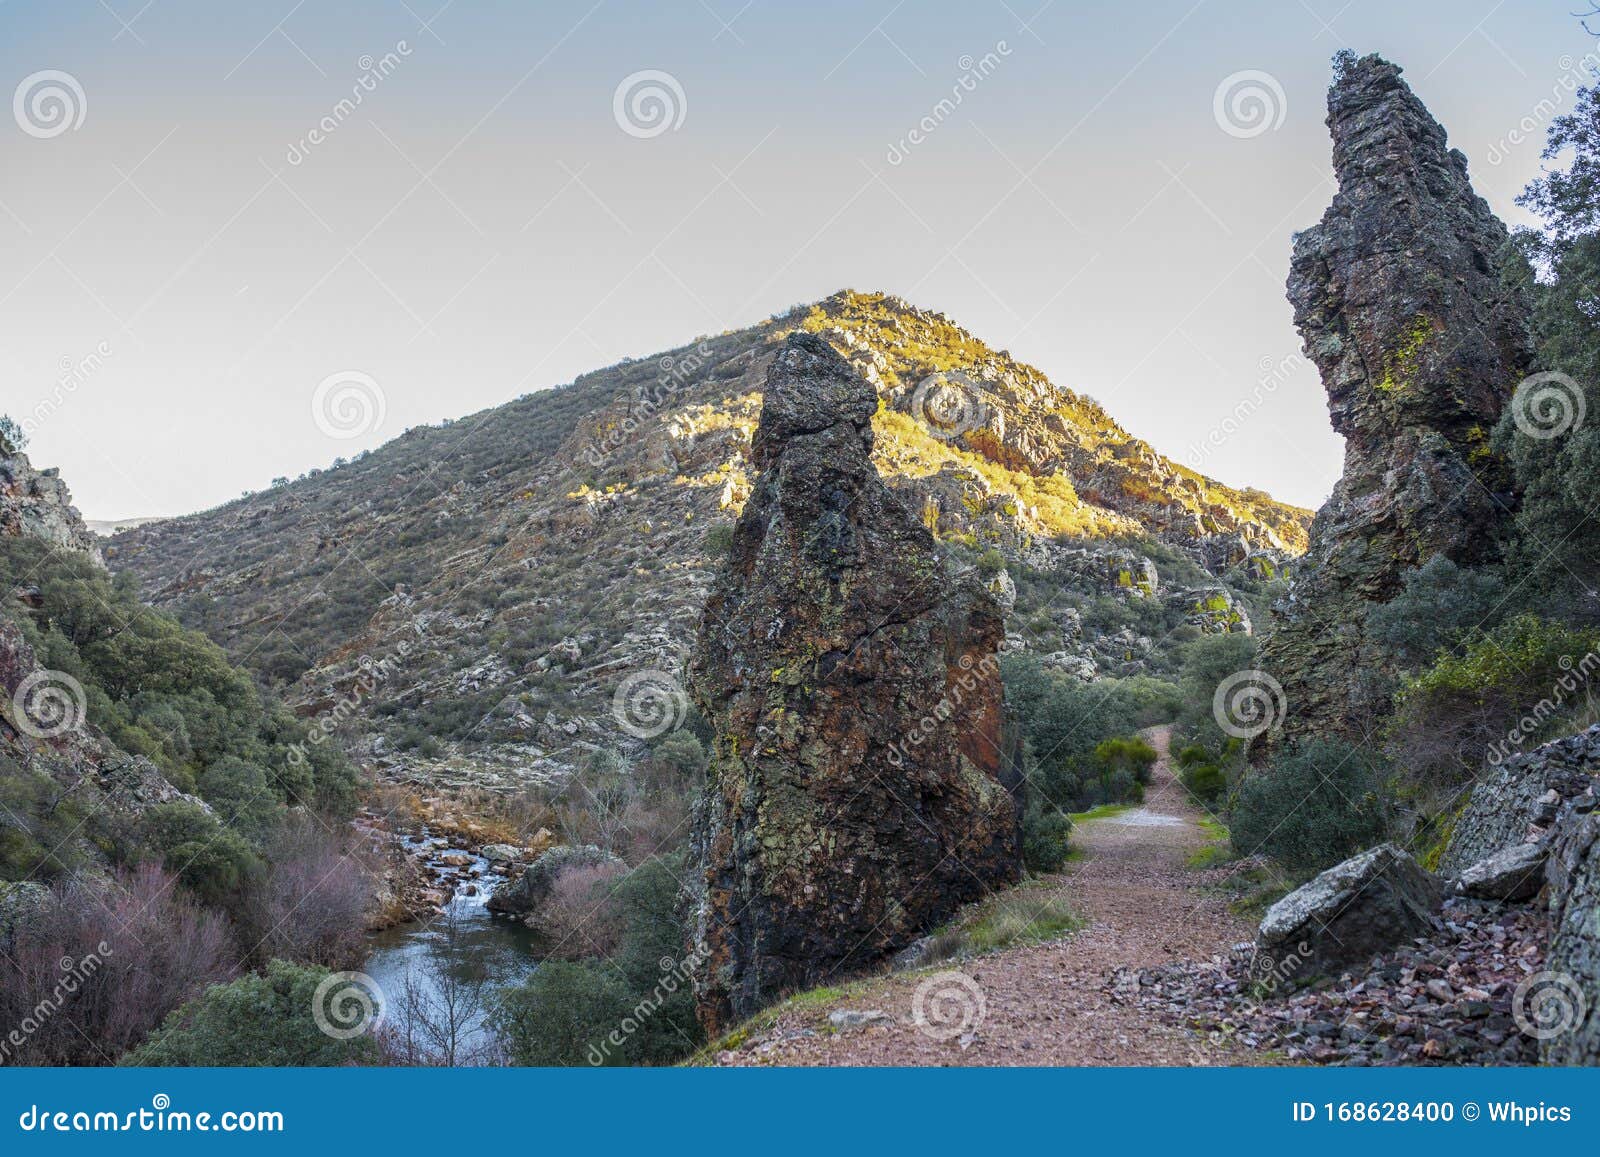 three quarzite towers site at national park of cabaneros, spain